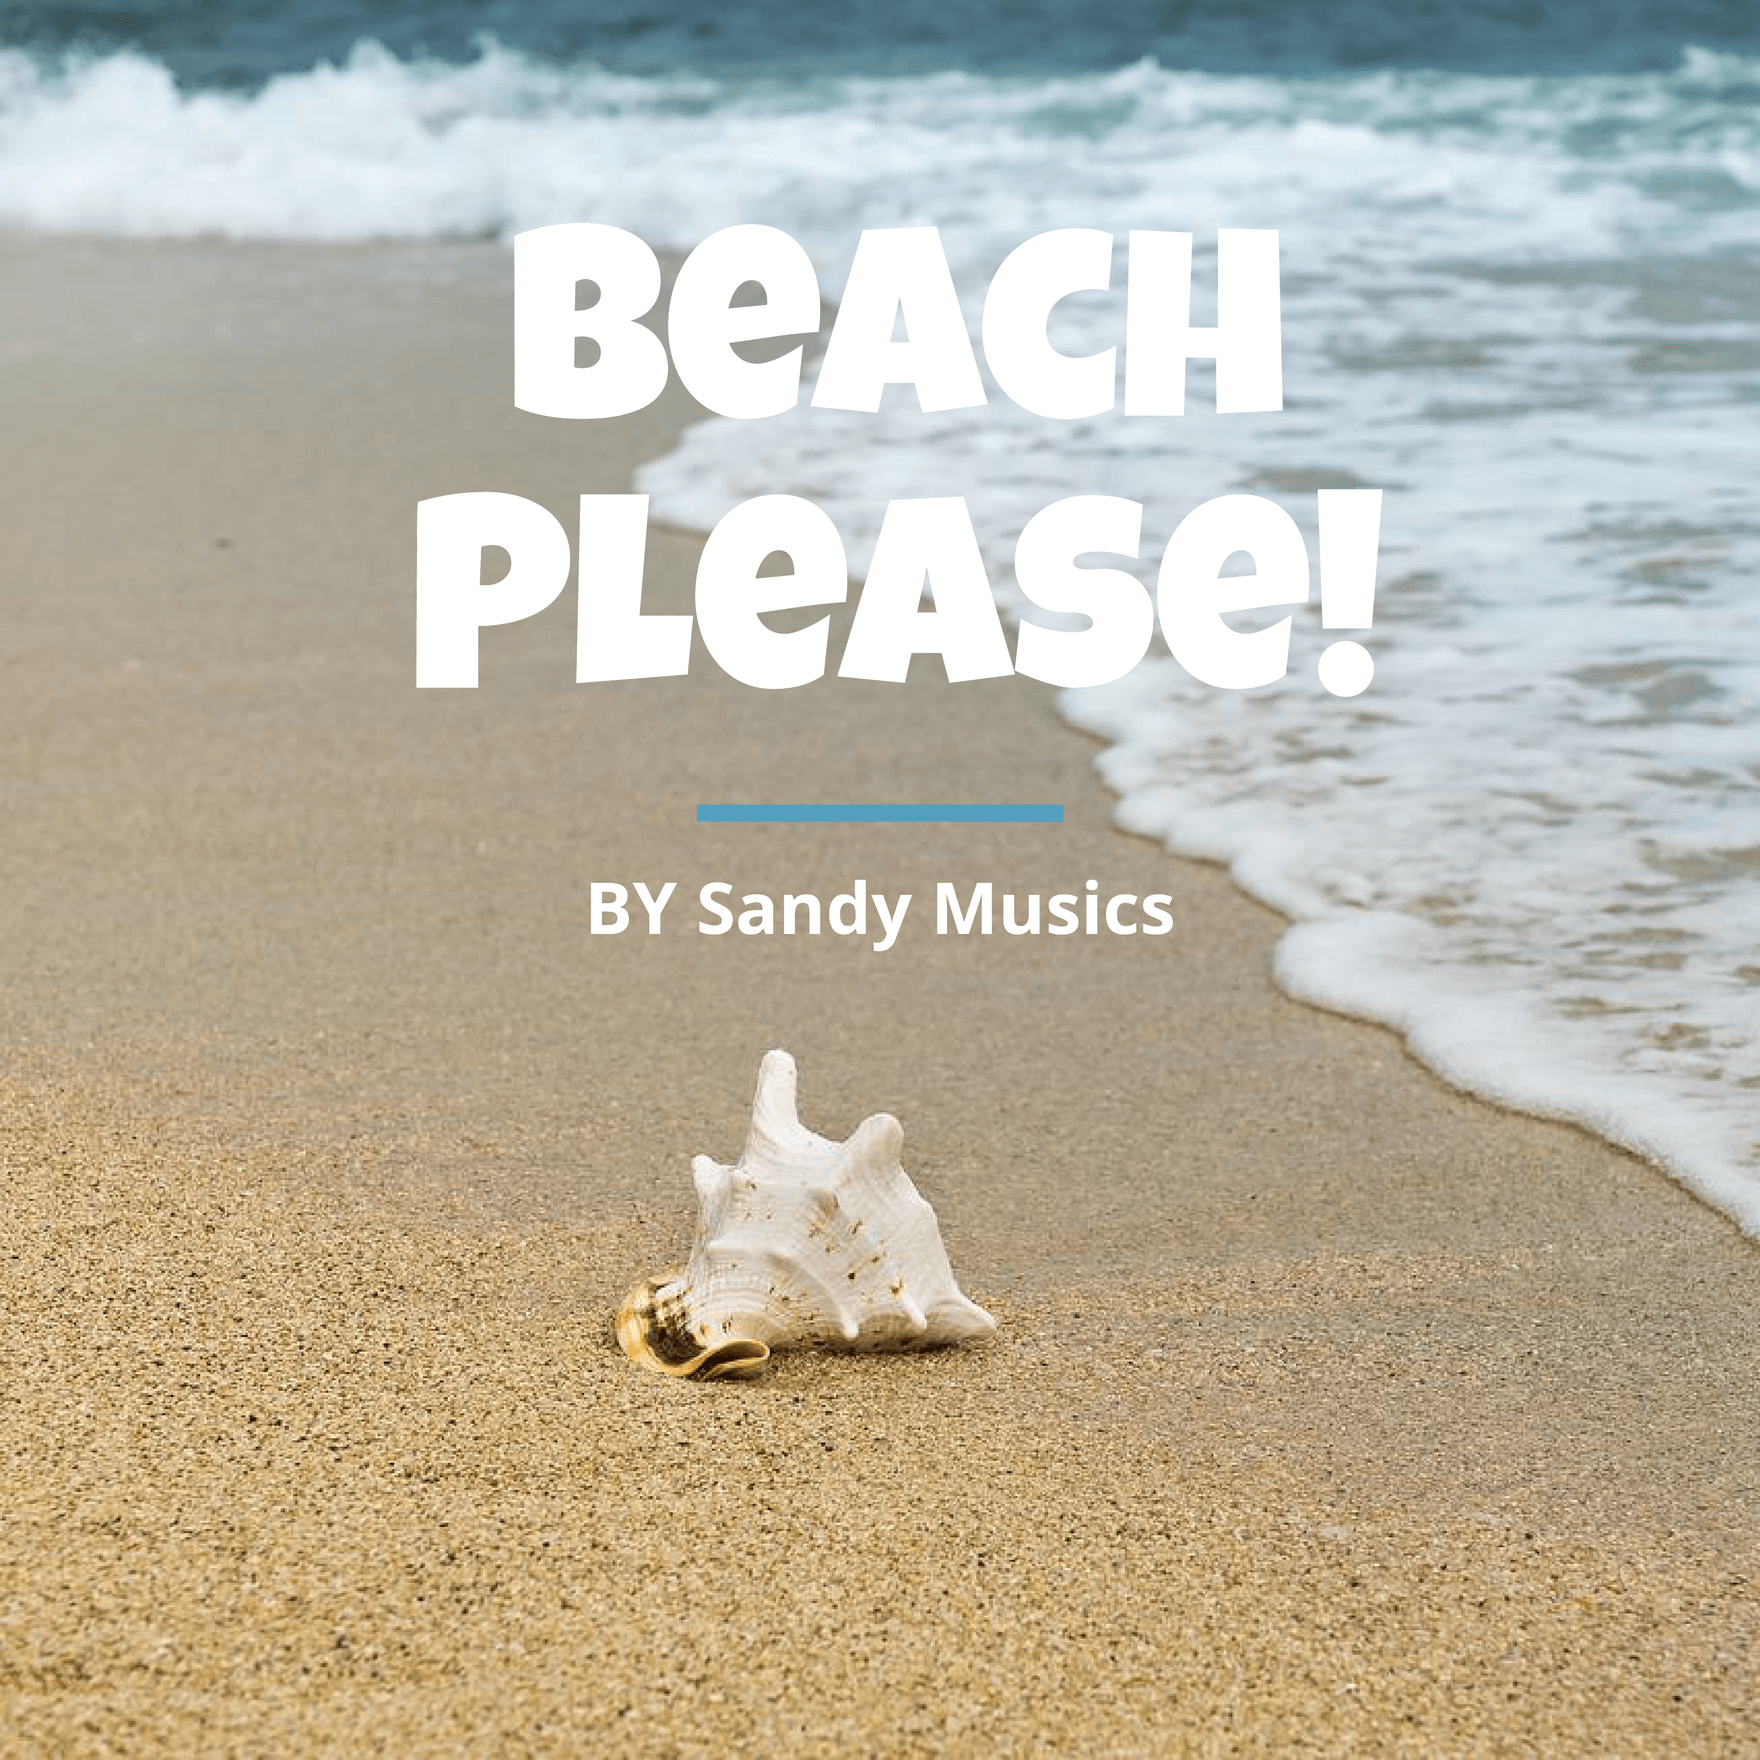 Beach Playlist Cover Template